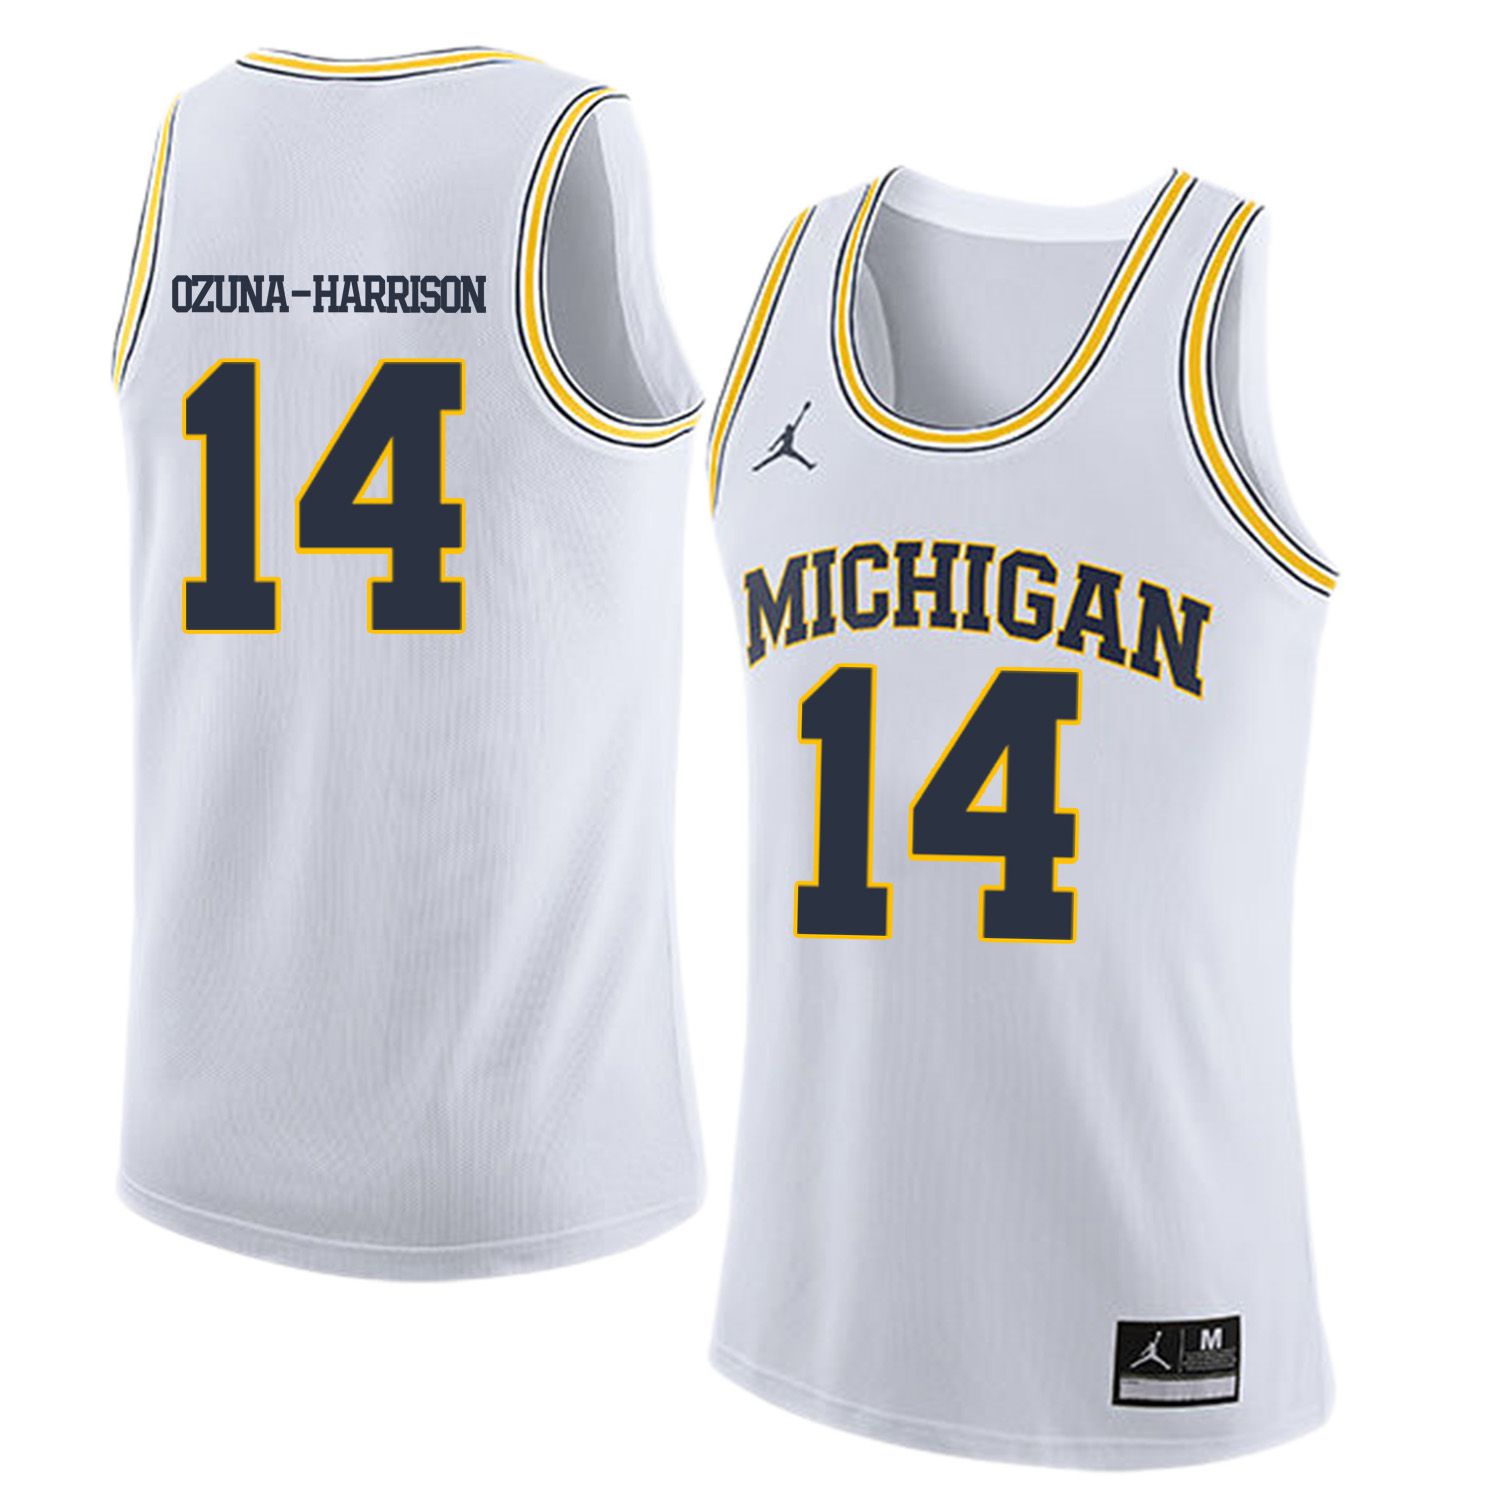 Men Jordan University of Michigan Basketball White 14 Ozuna-Harrison Customized NCAA Jerseys